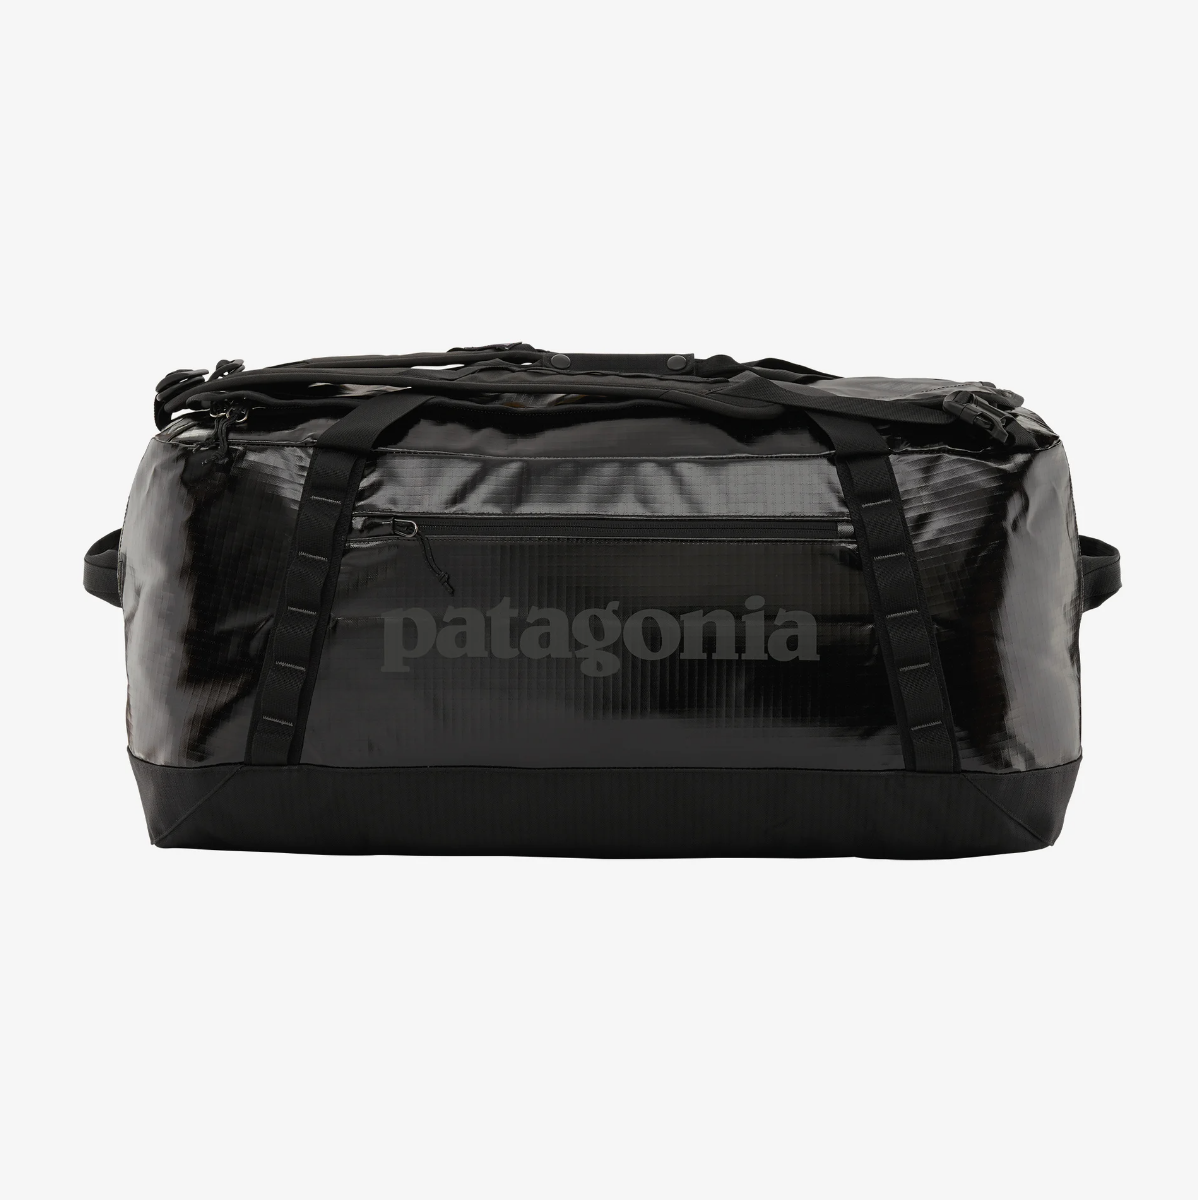 Patagonia Black Hole Duffel 70L Bag